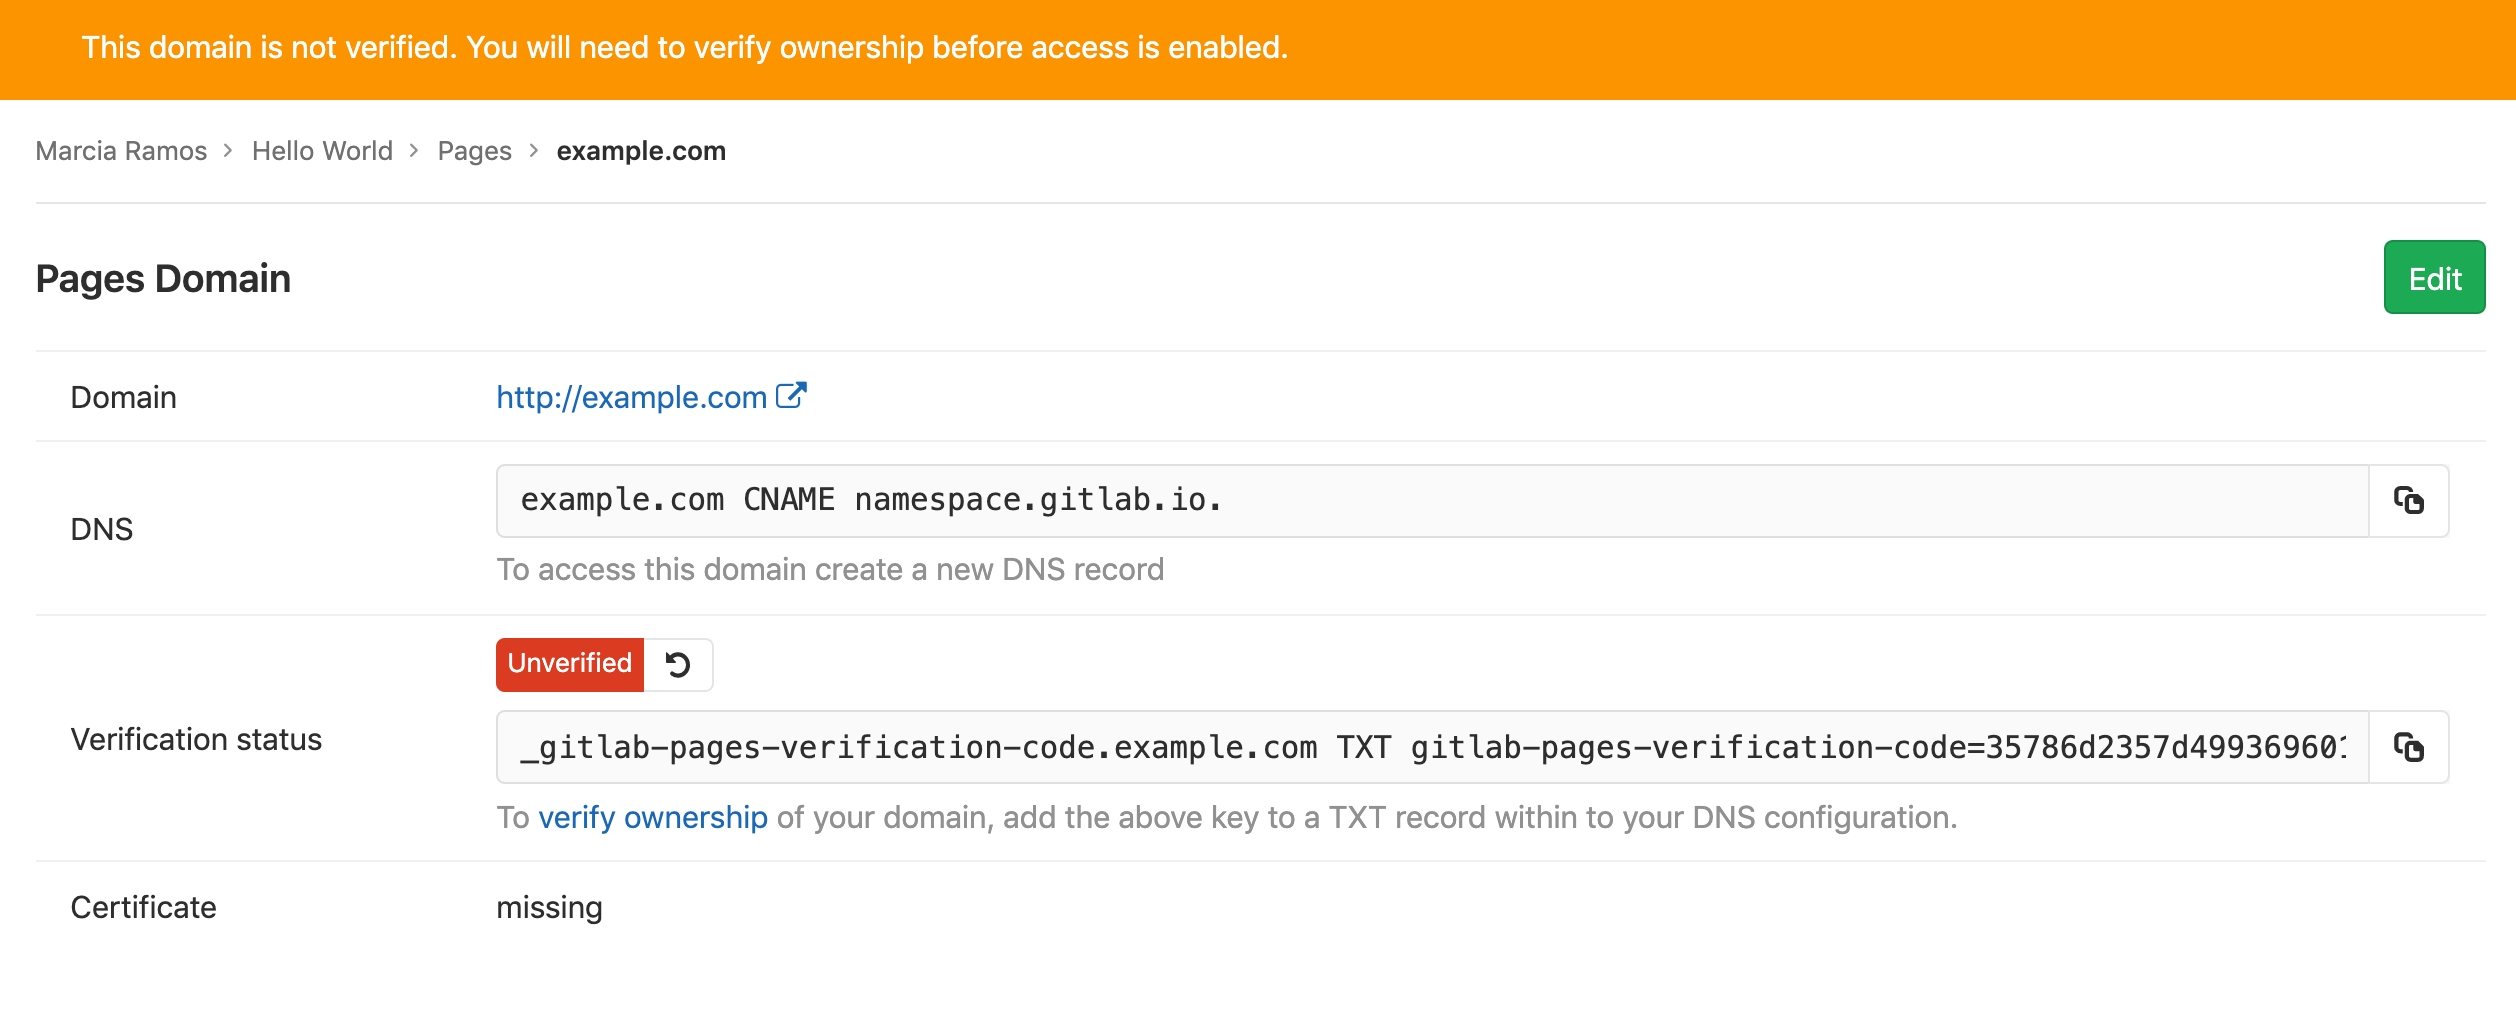 GitLab Pages domain verification code